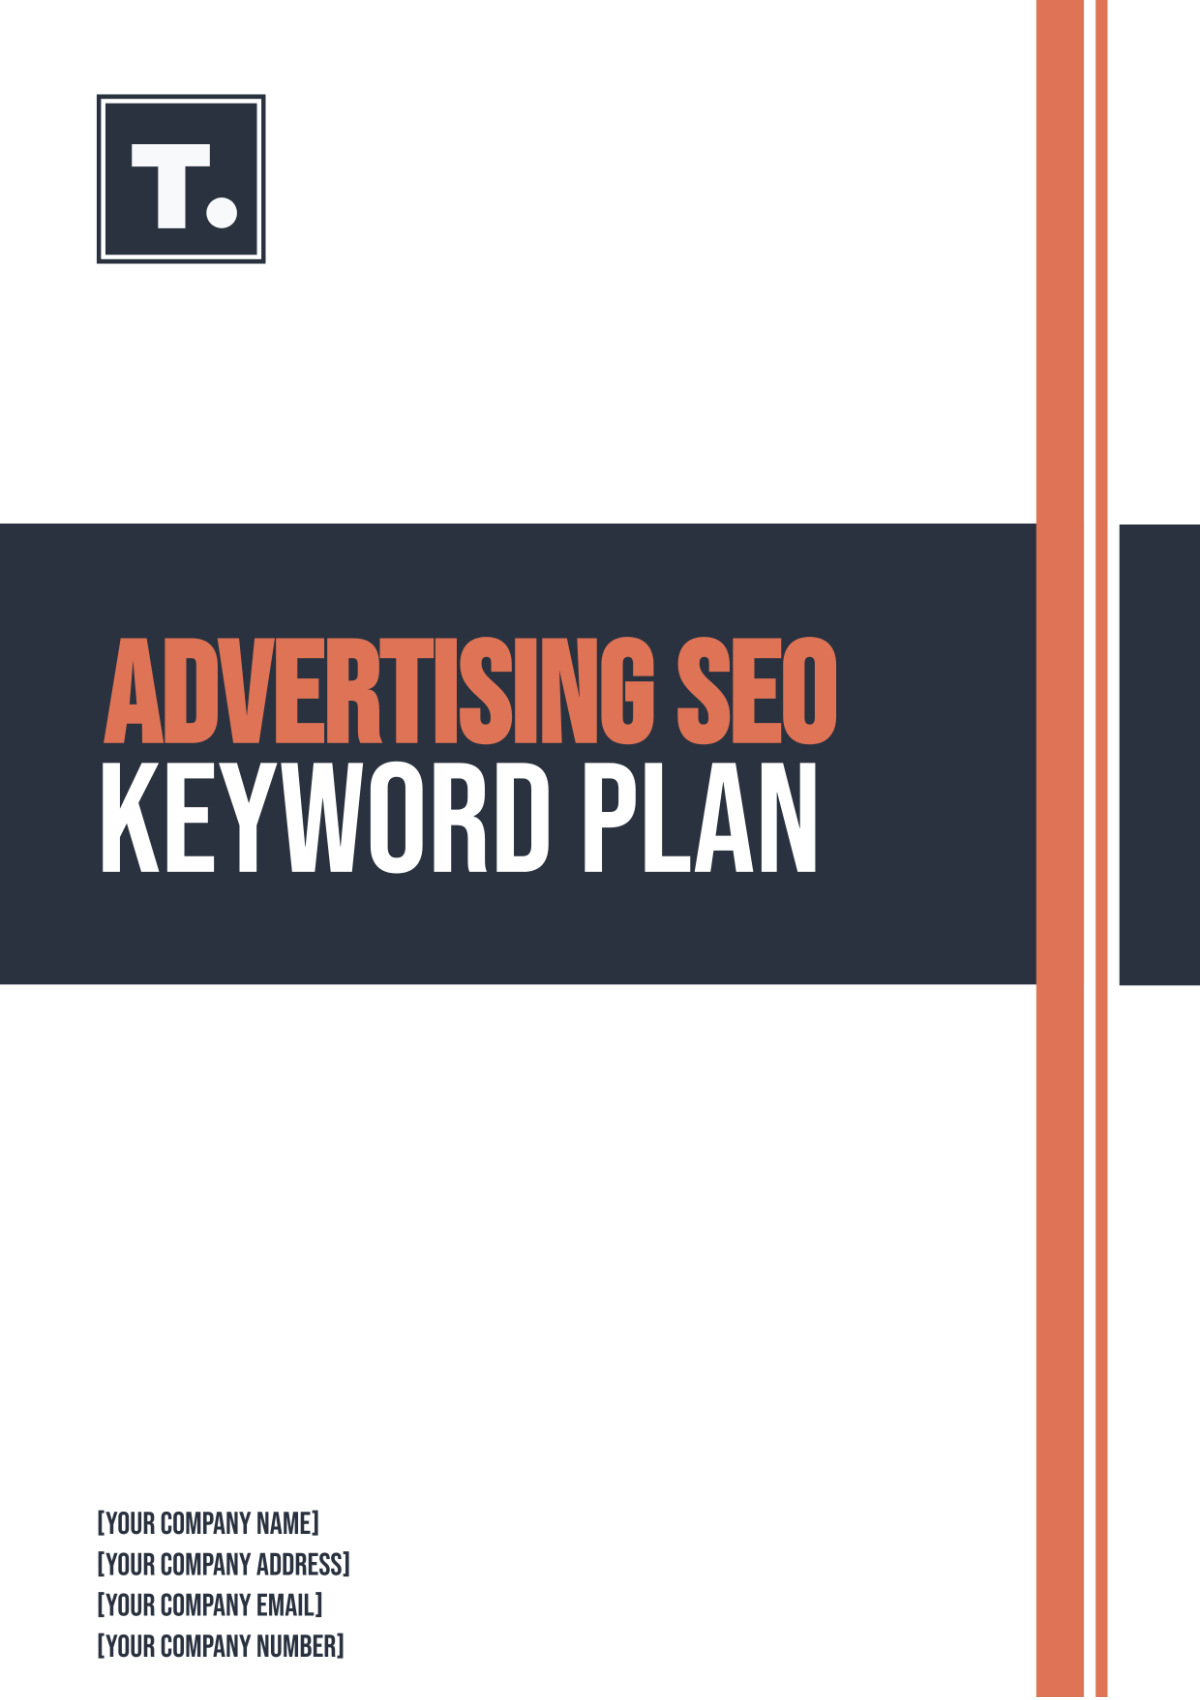 Free Advertising SEO Keyword Plan Template